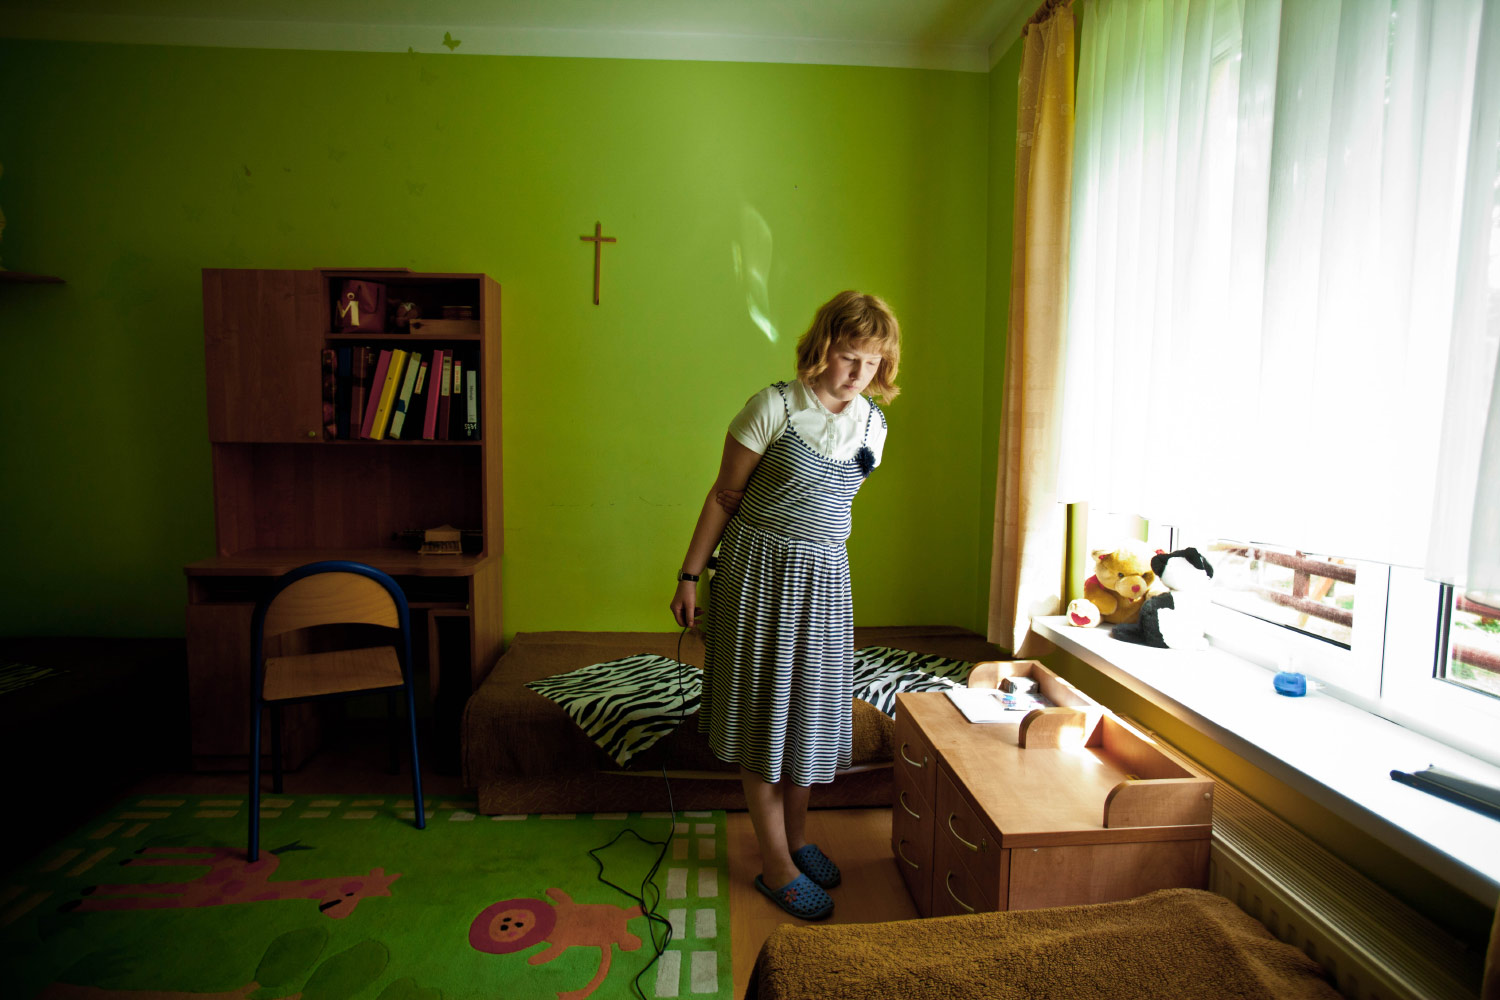 Laski - Documentary photographer Anna Bedyńska